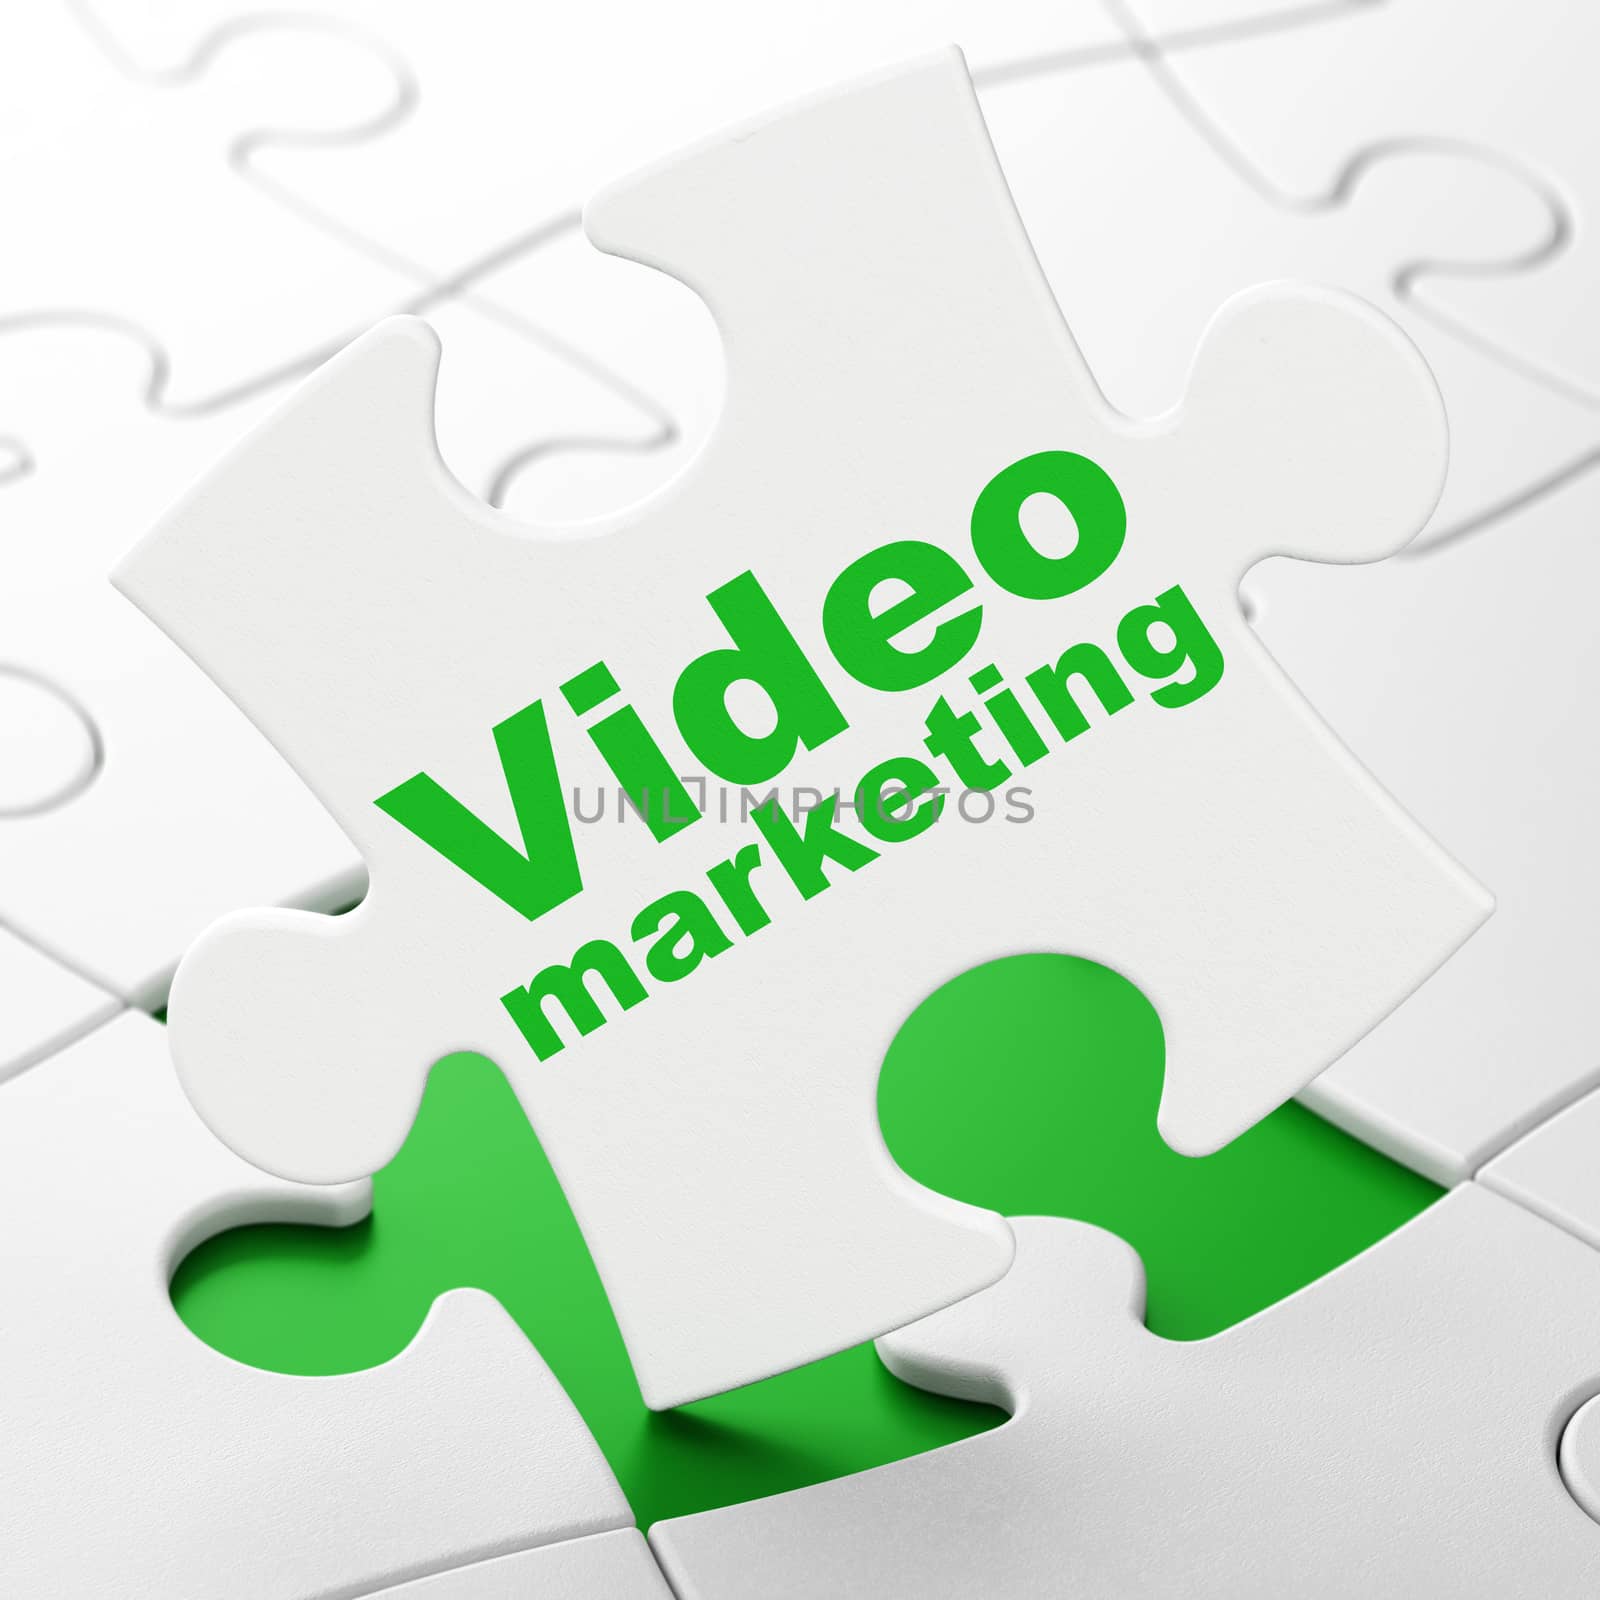 Finance concept: Video Marketing on puzzle background by maxkabakov